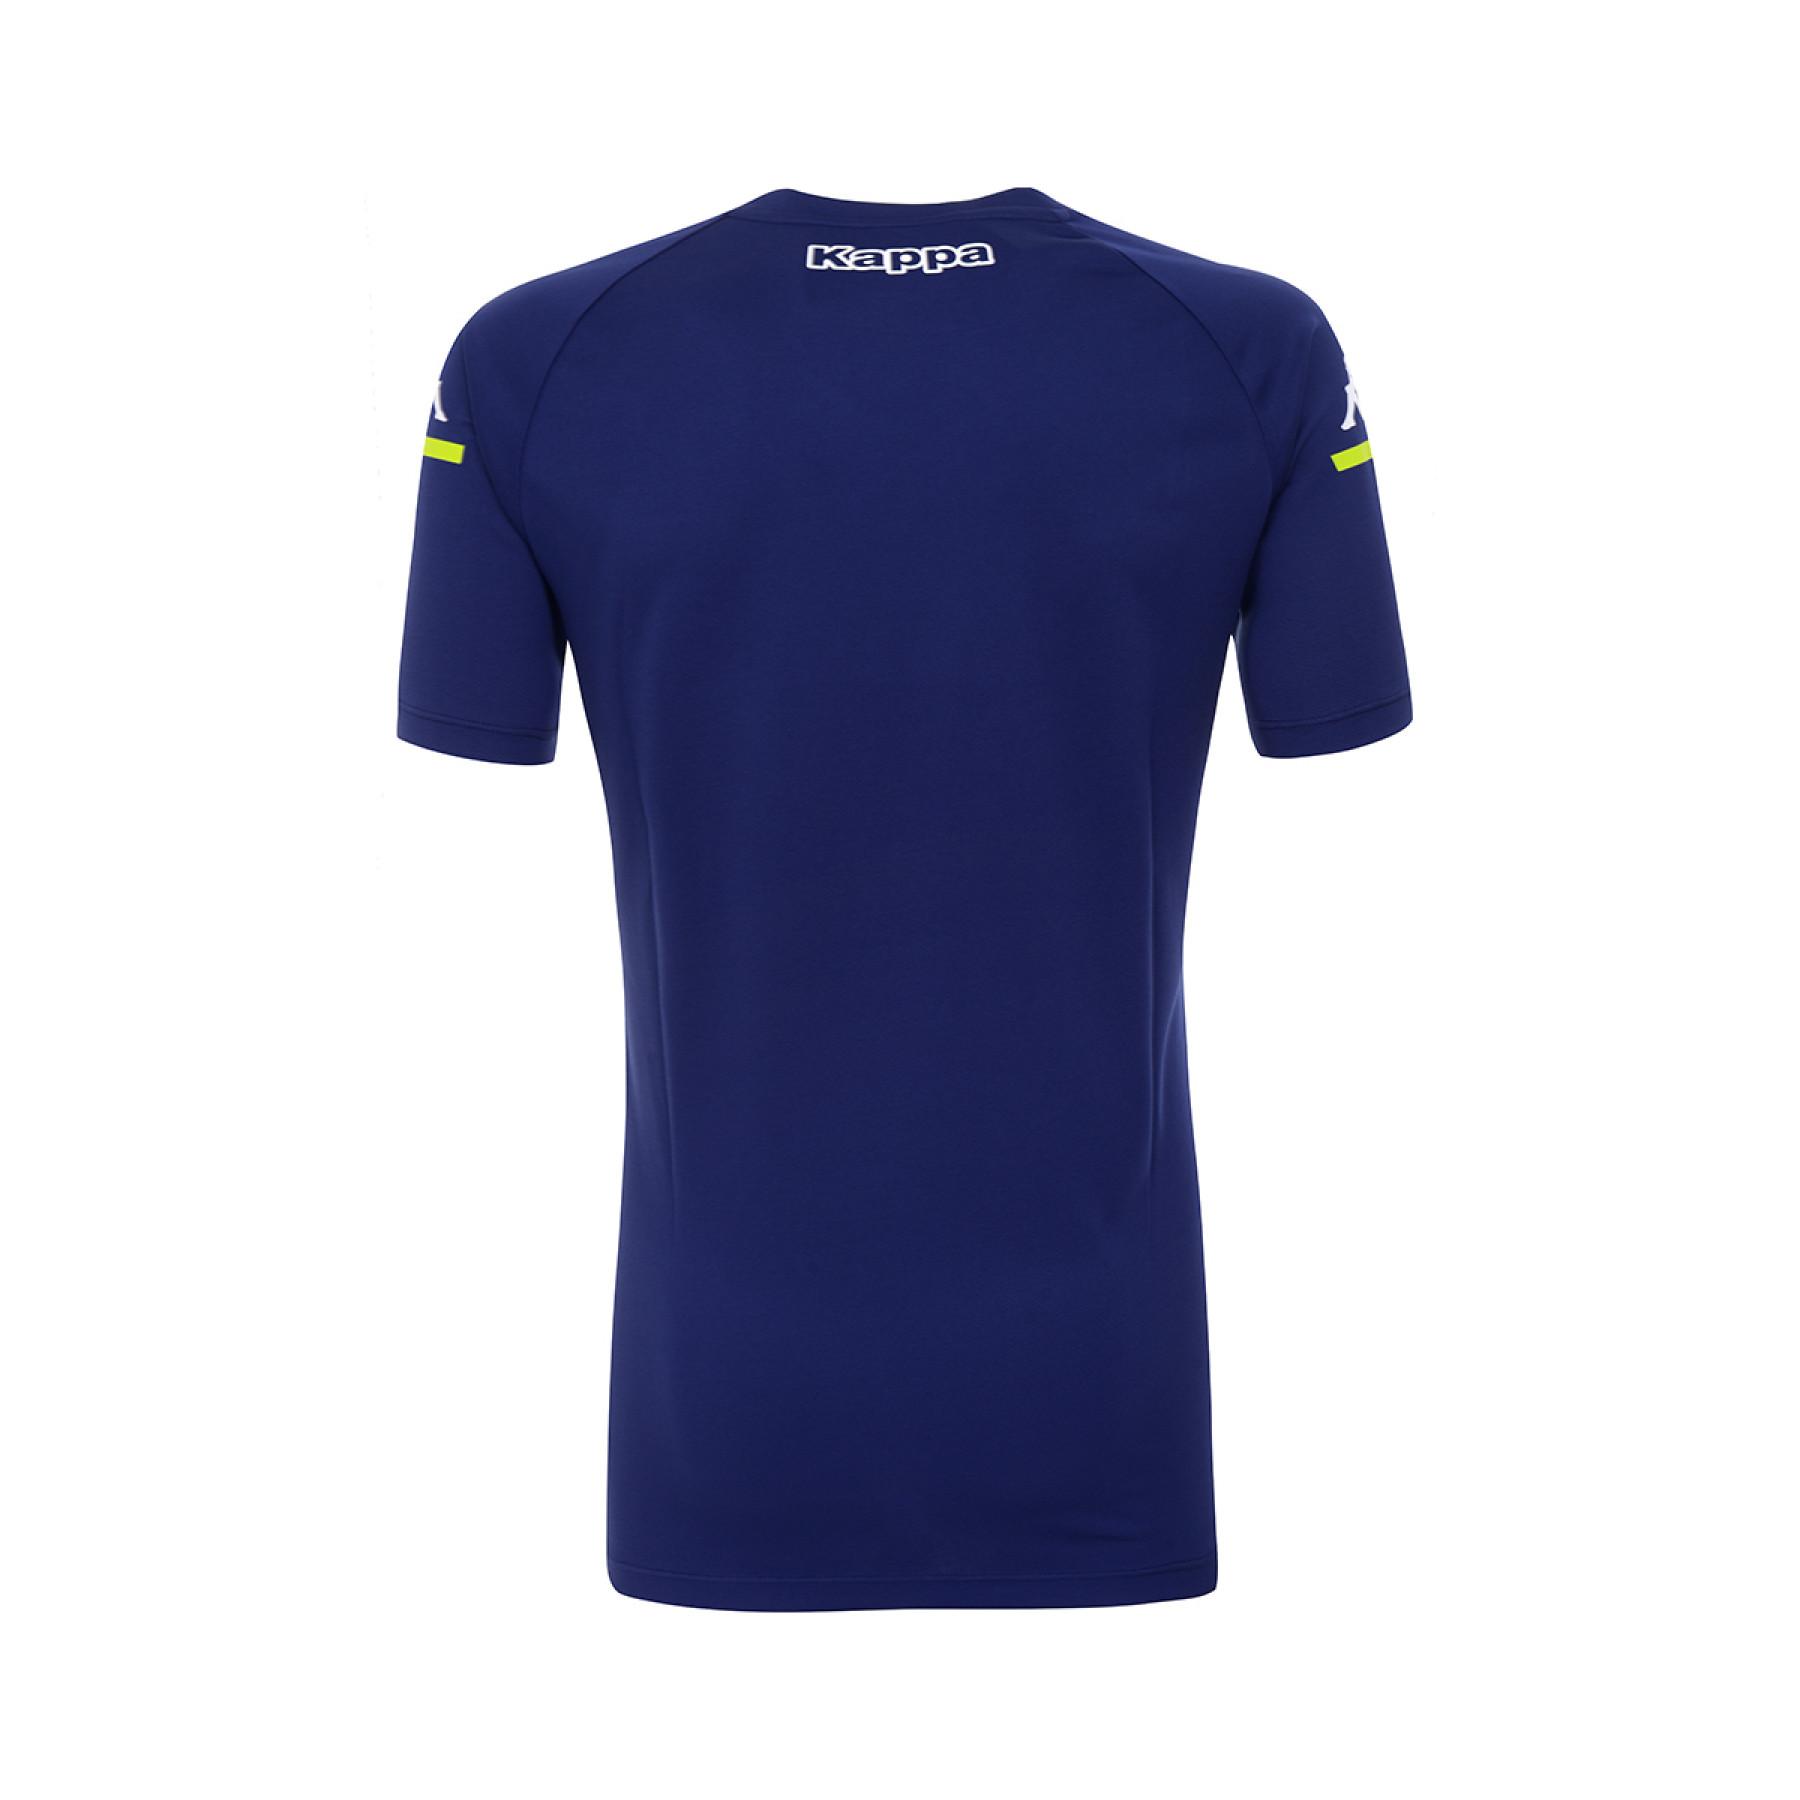 Child's T-shirt Aston Villa FC 2020/21 aboupres pro 4